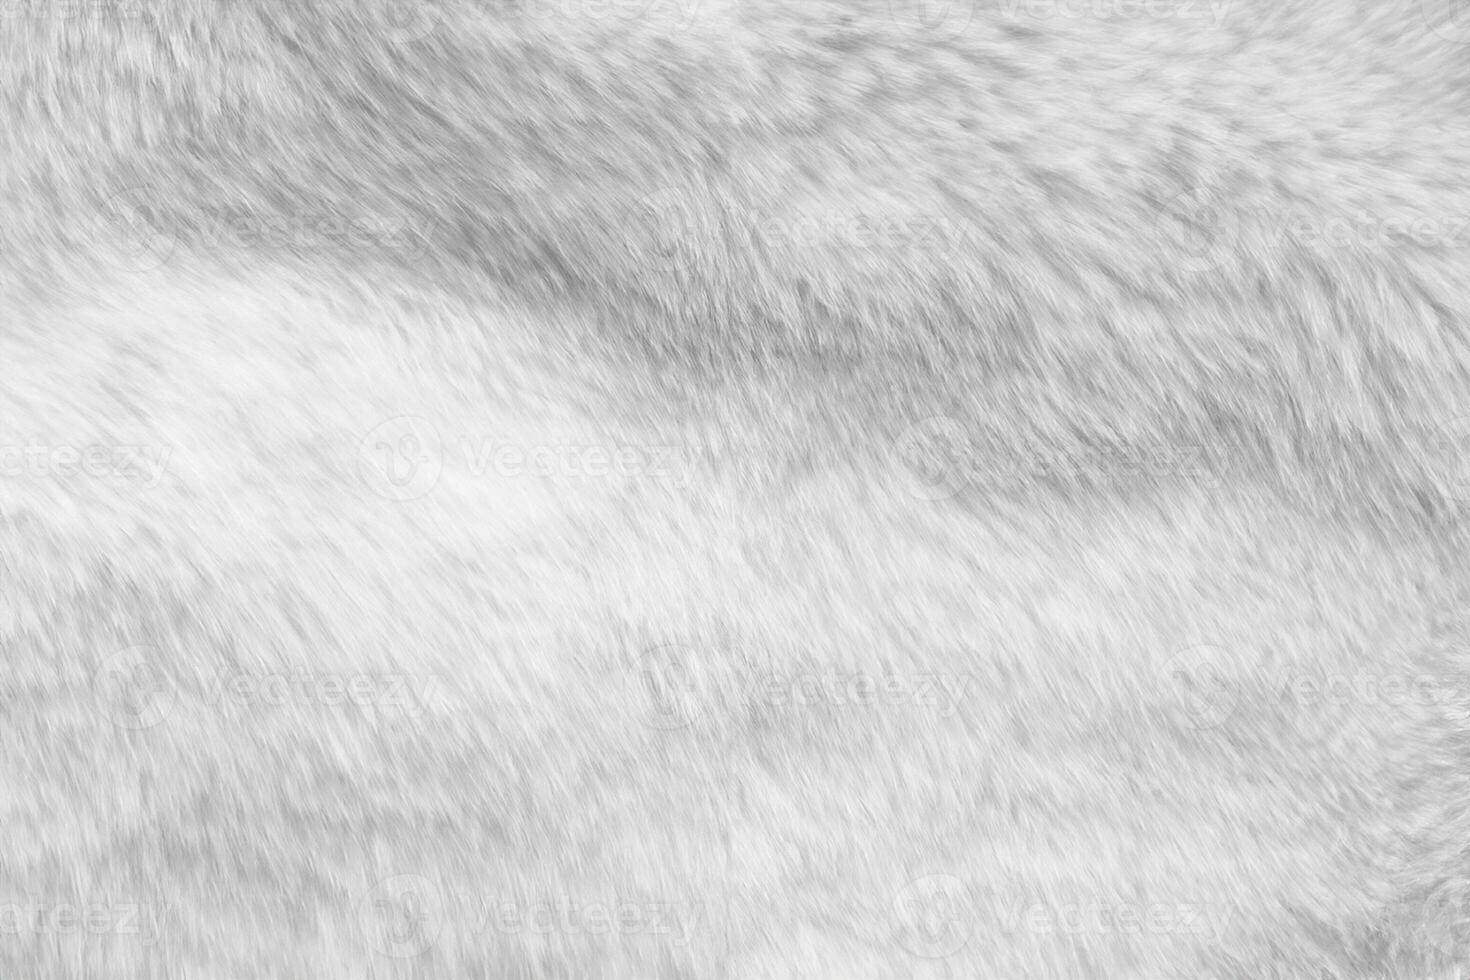 fond de texture de tissu de fourrure blanche photo